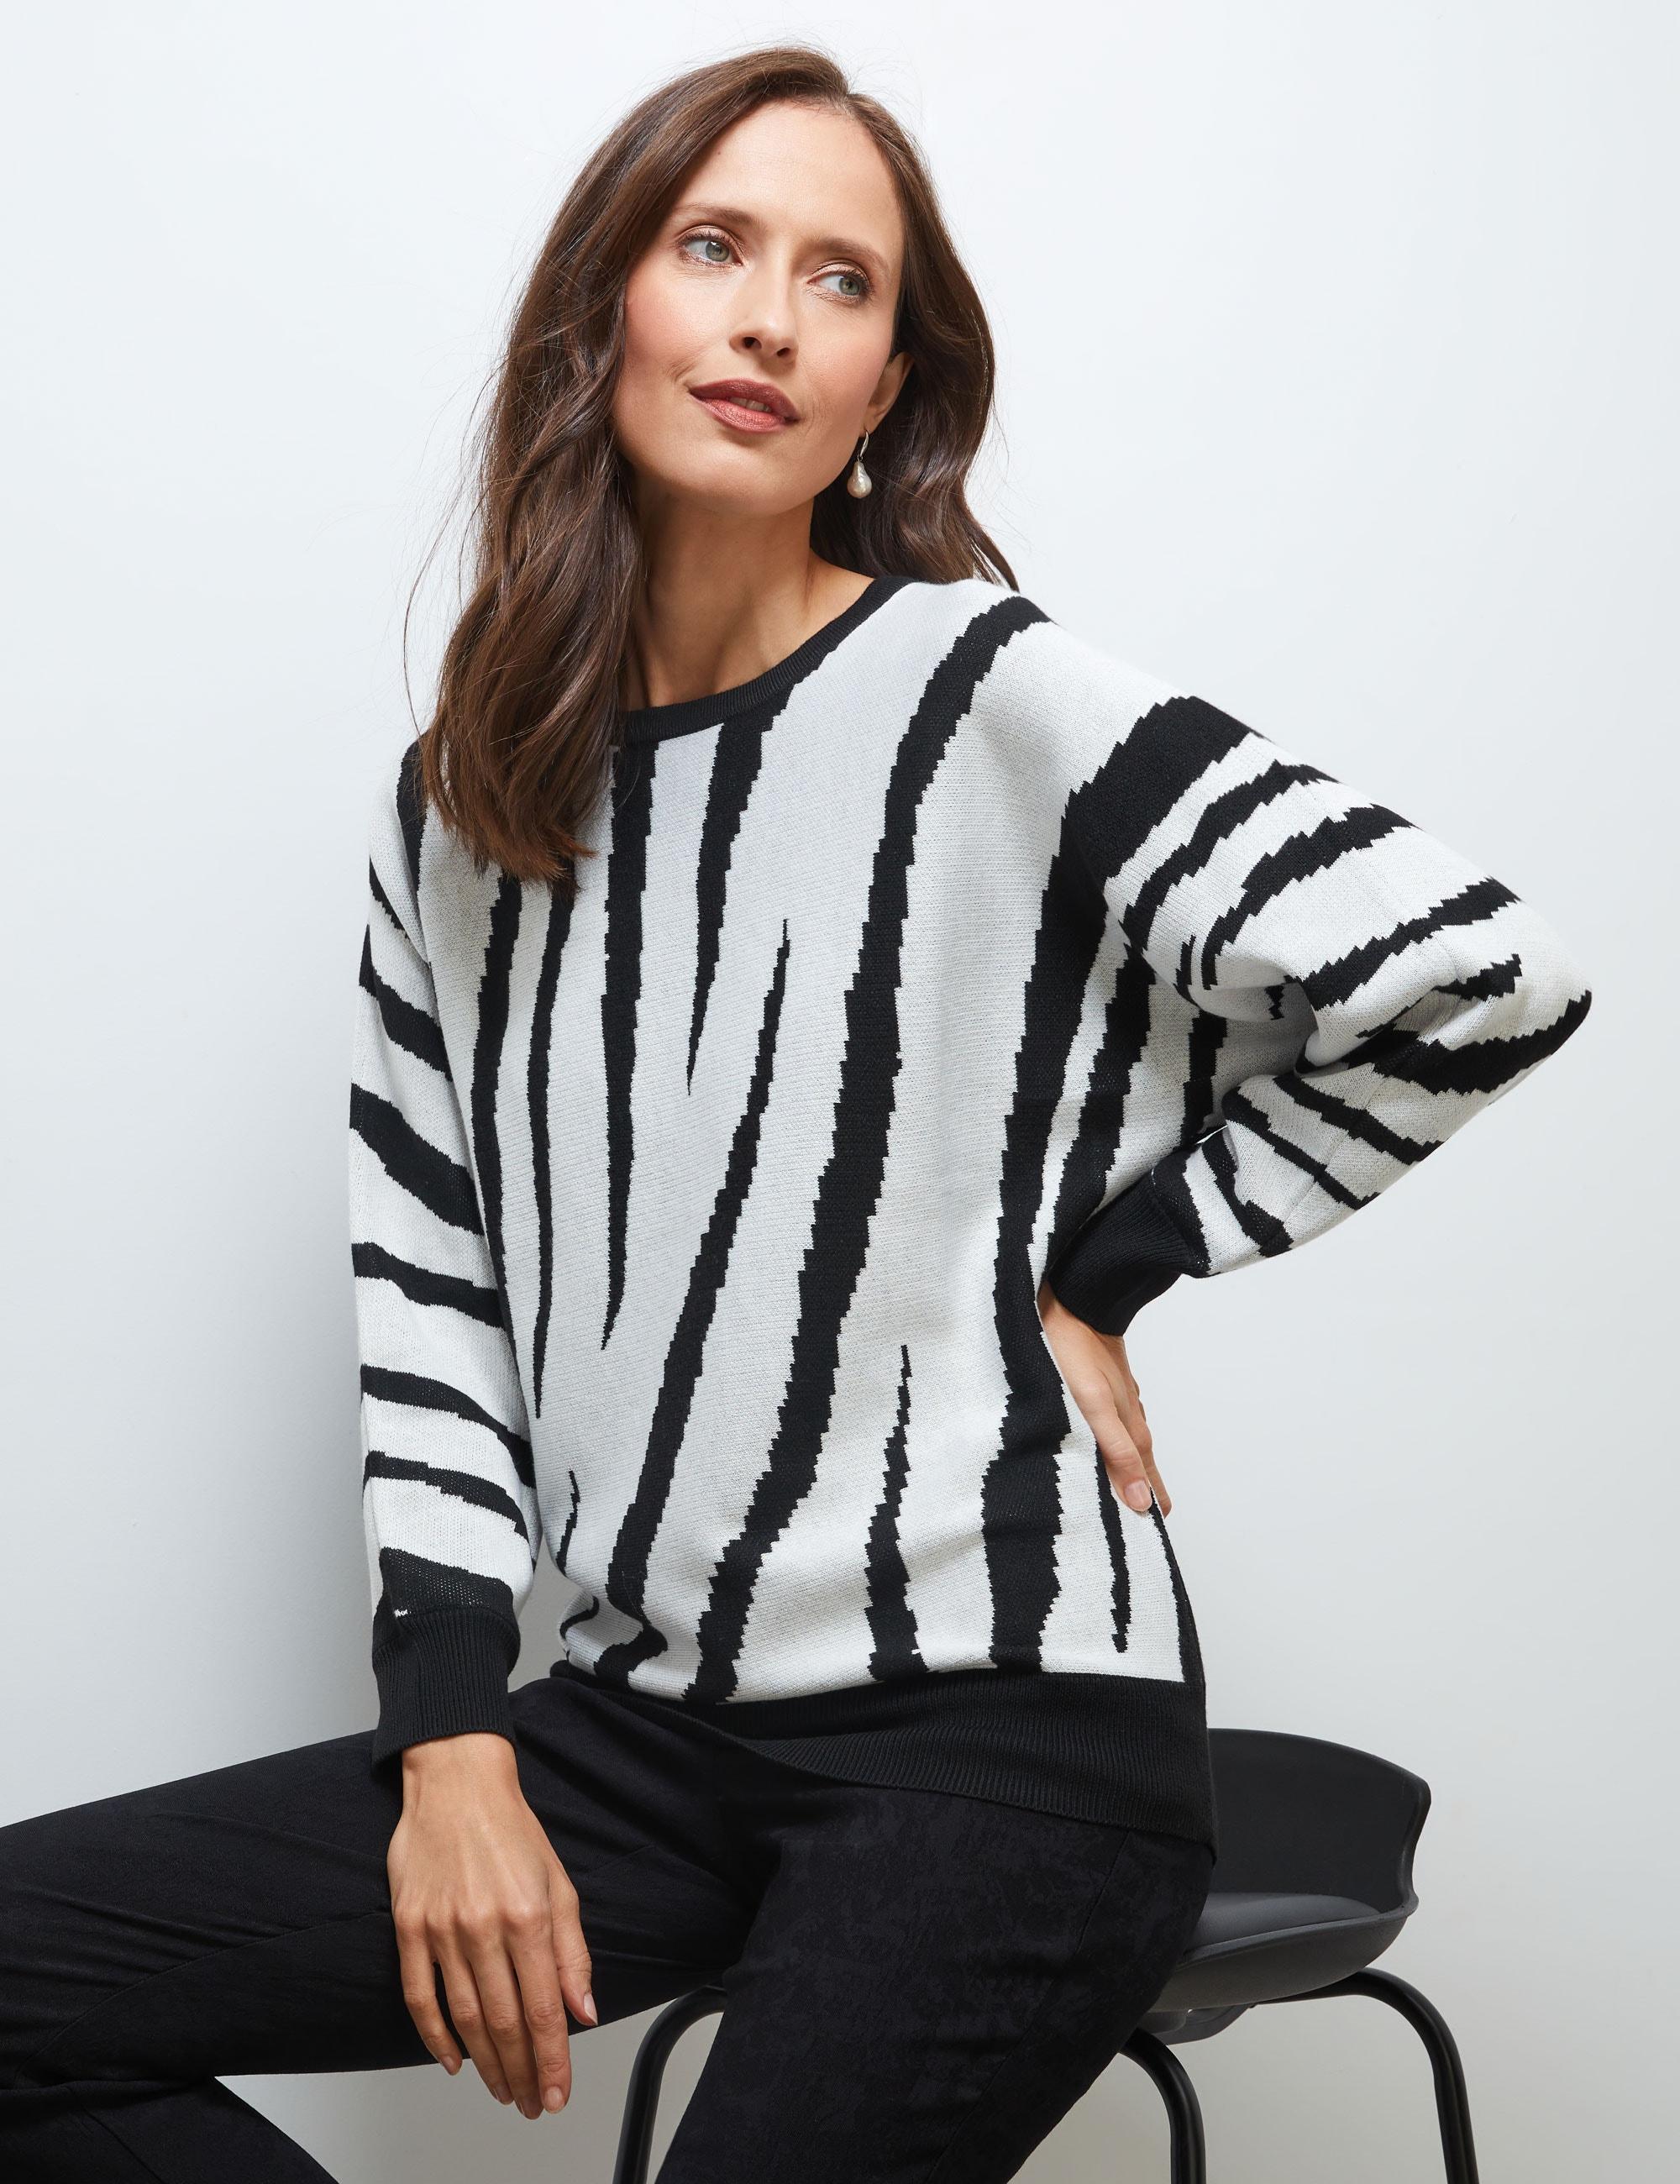 NONI B - Womens Jumper - Long Winter Sweater - Black Pullover Warm Wool Clothing - Long Sleeve - Animal Print - Crew Neck - Zebra Jacquard - Work Wear